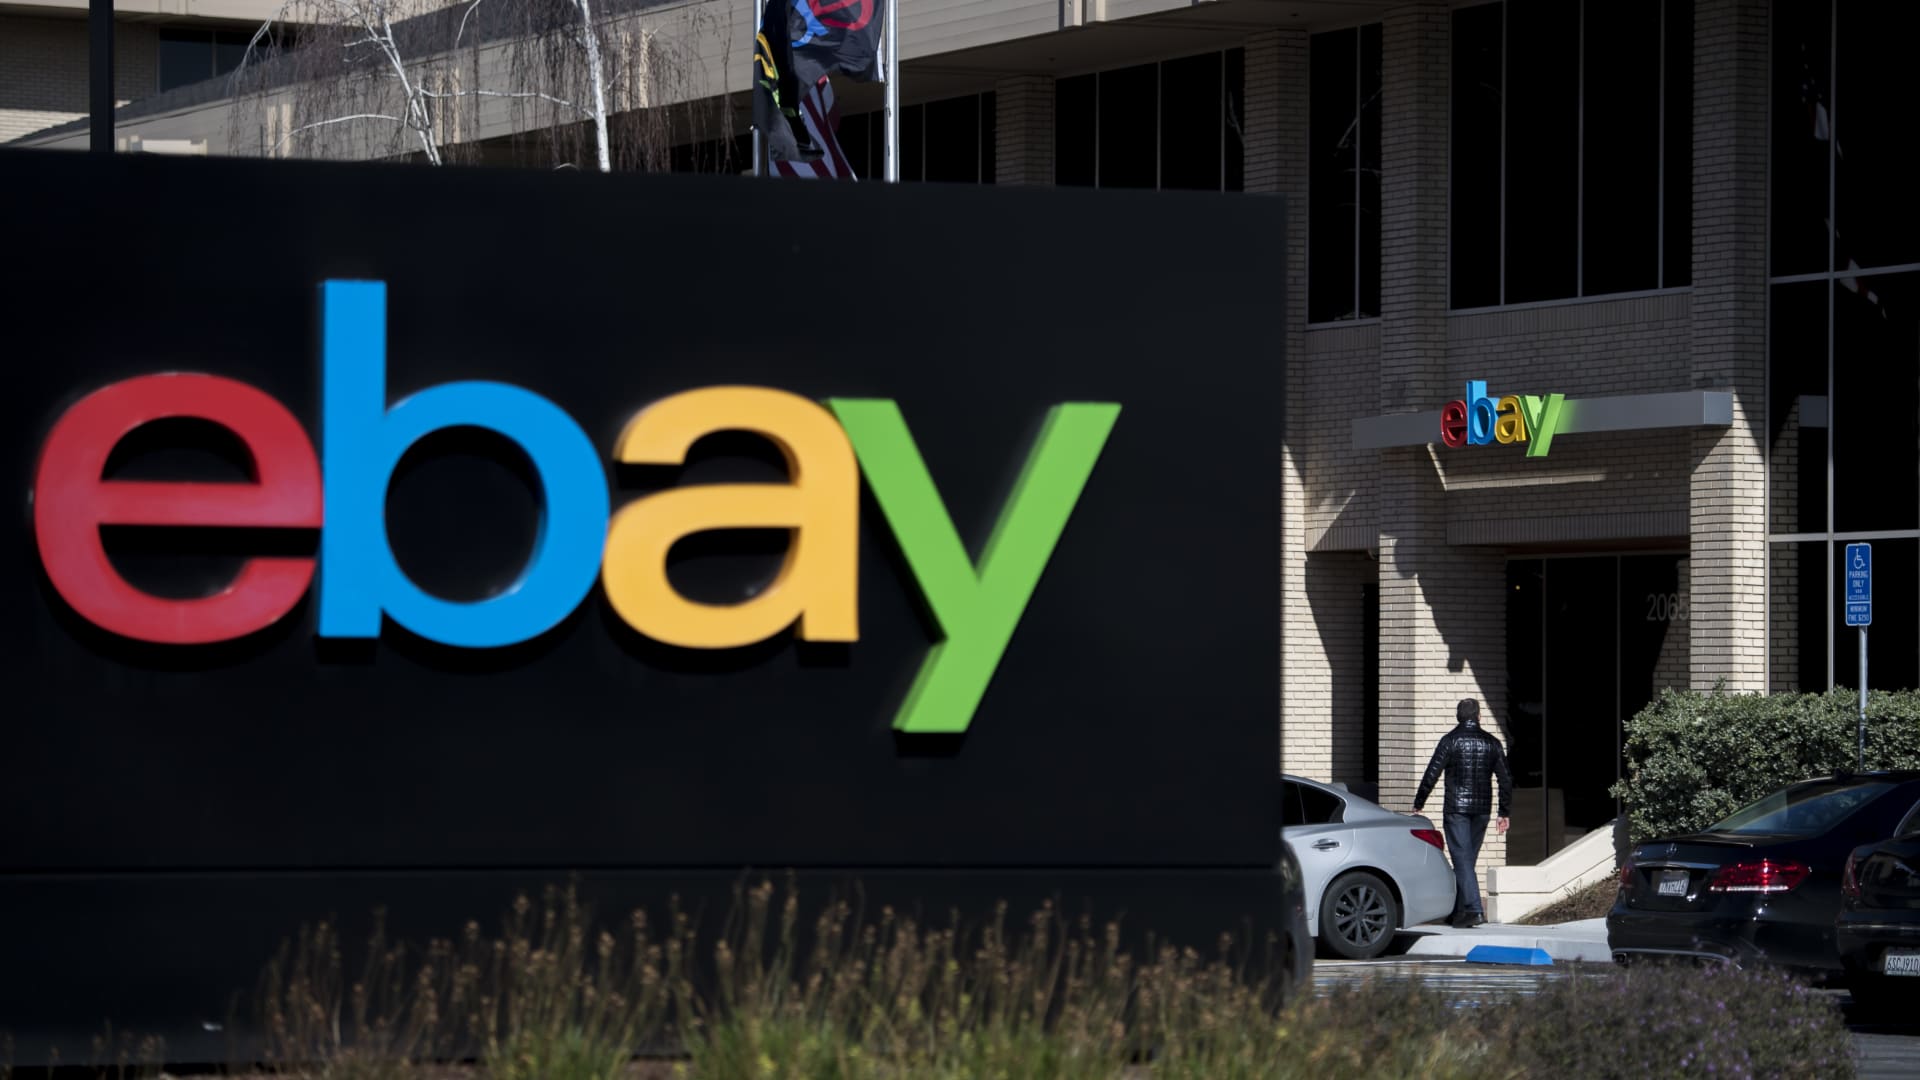 Former eBay executives given prison time for cyberstalking scheme